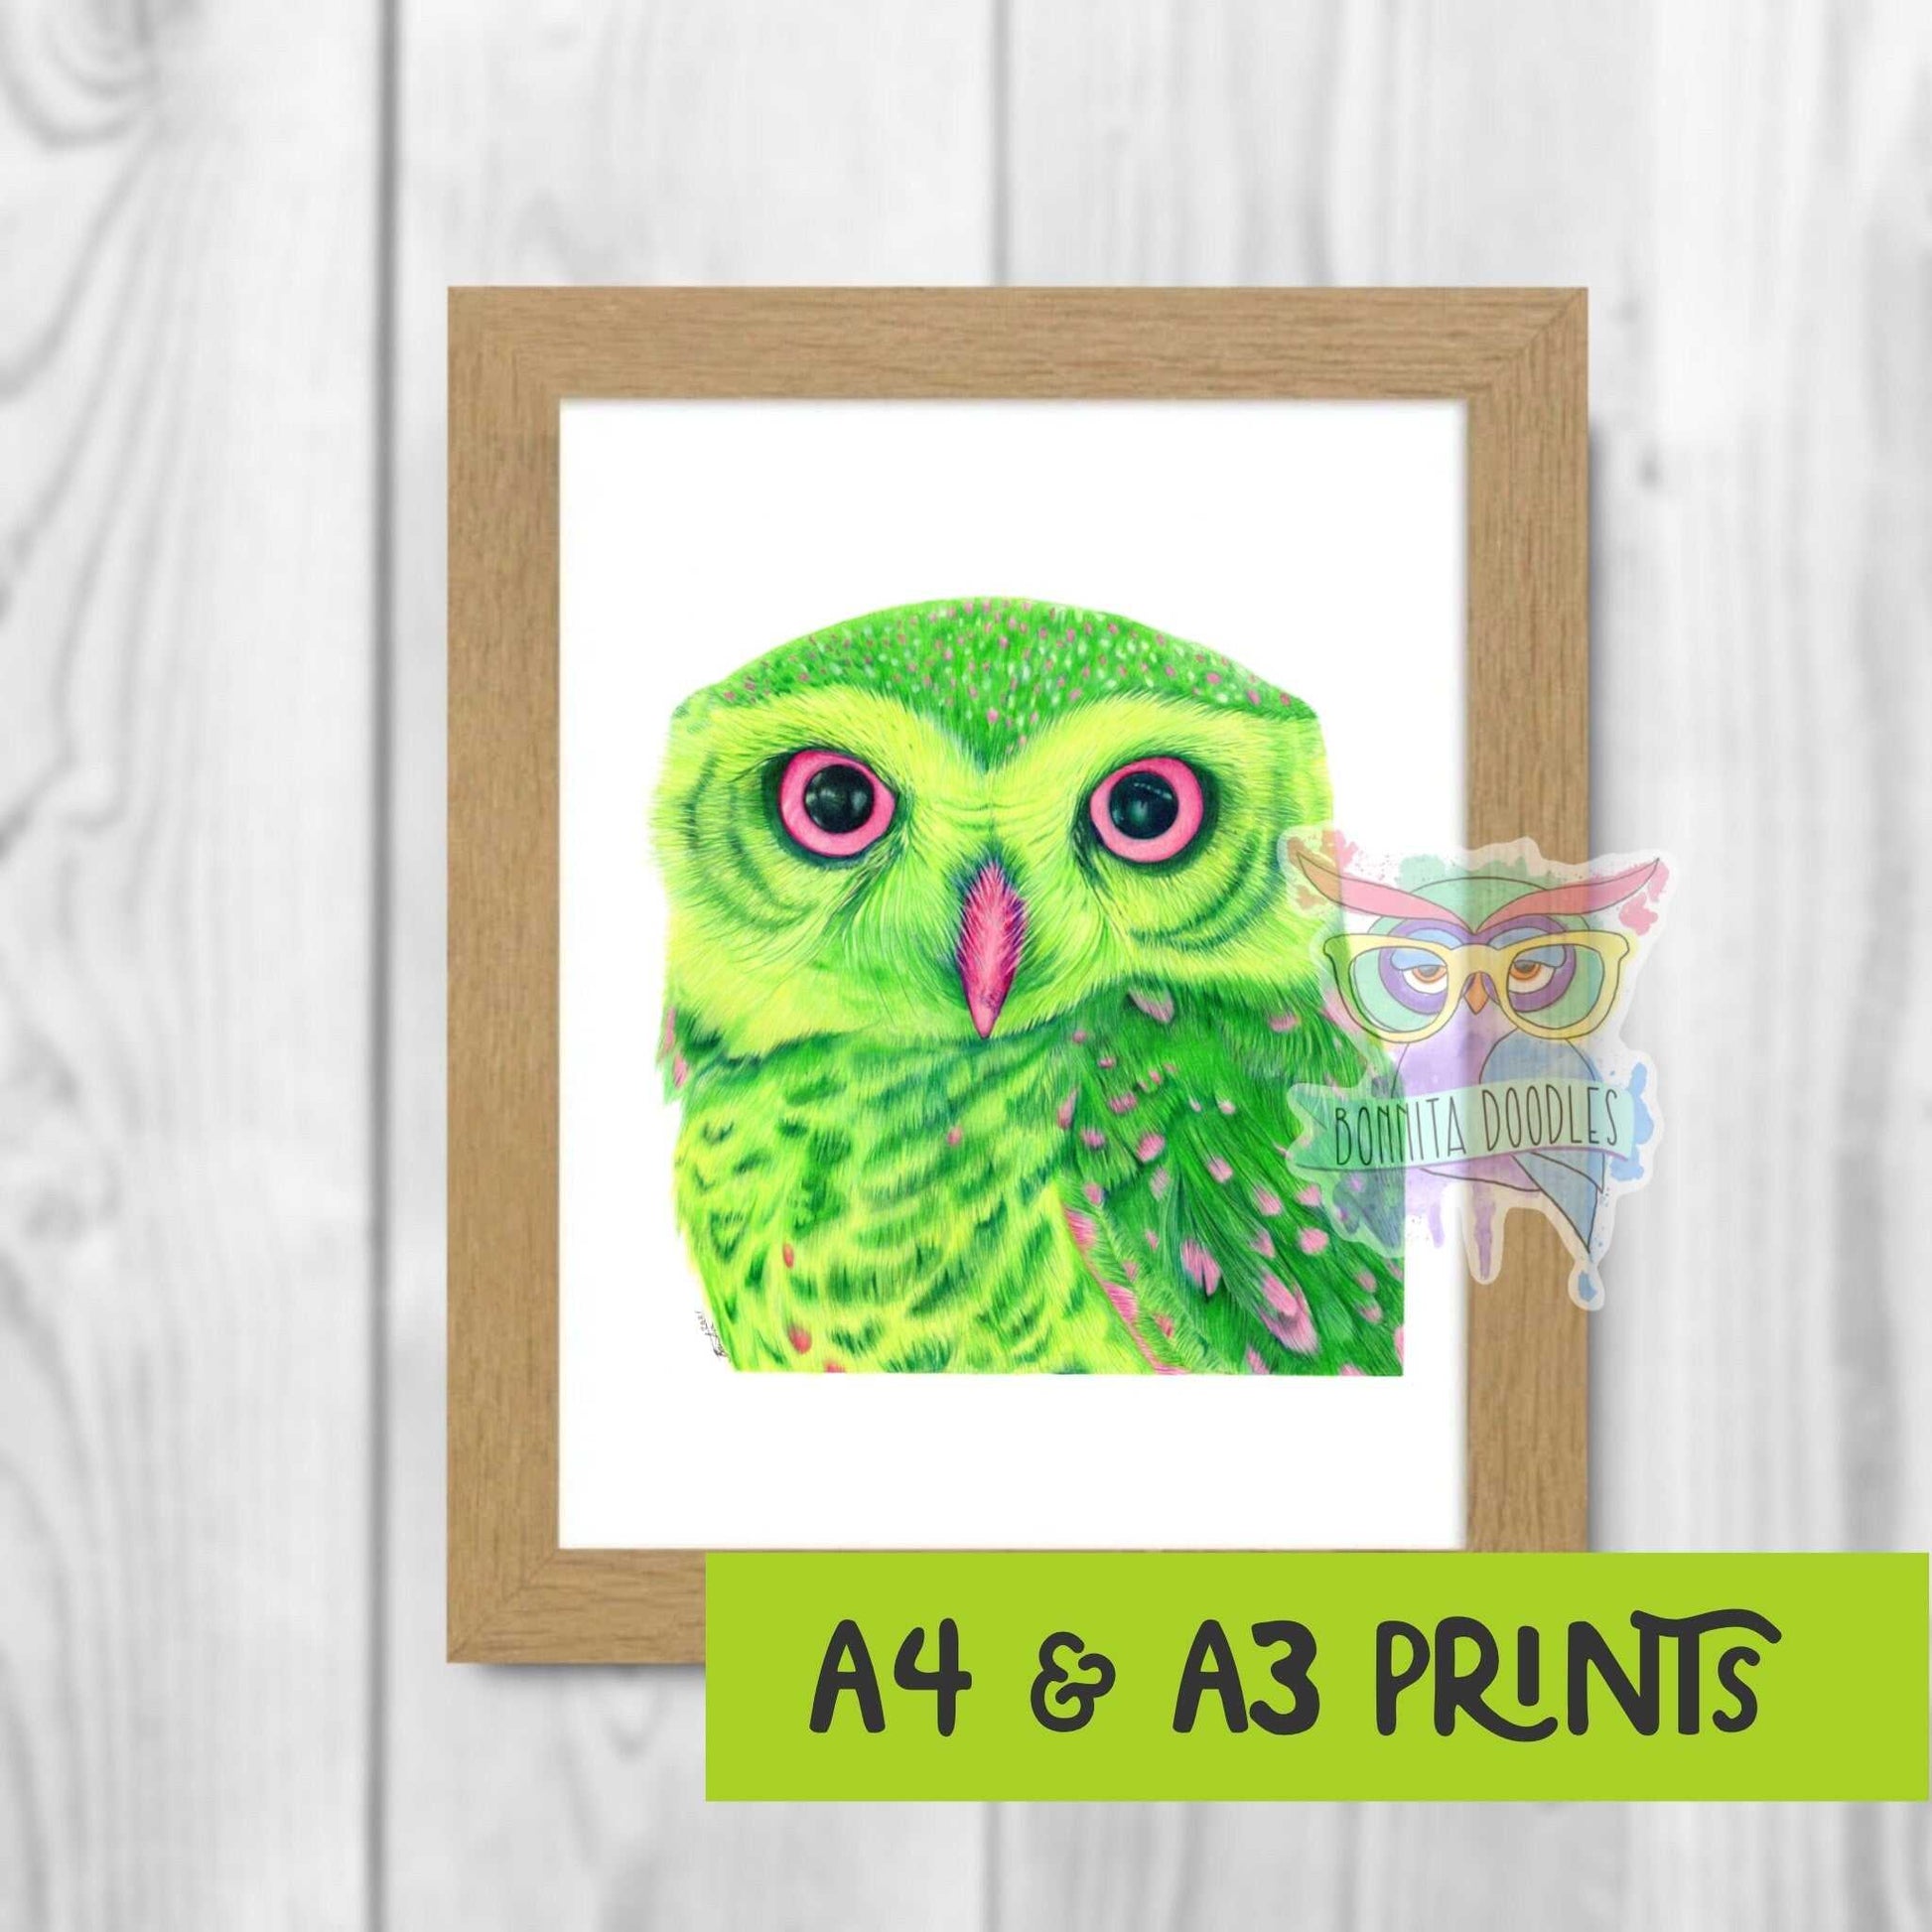 Little Owl - Peridot Series. Home art print